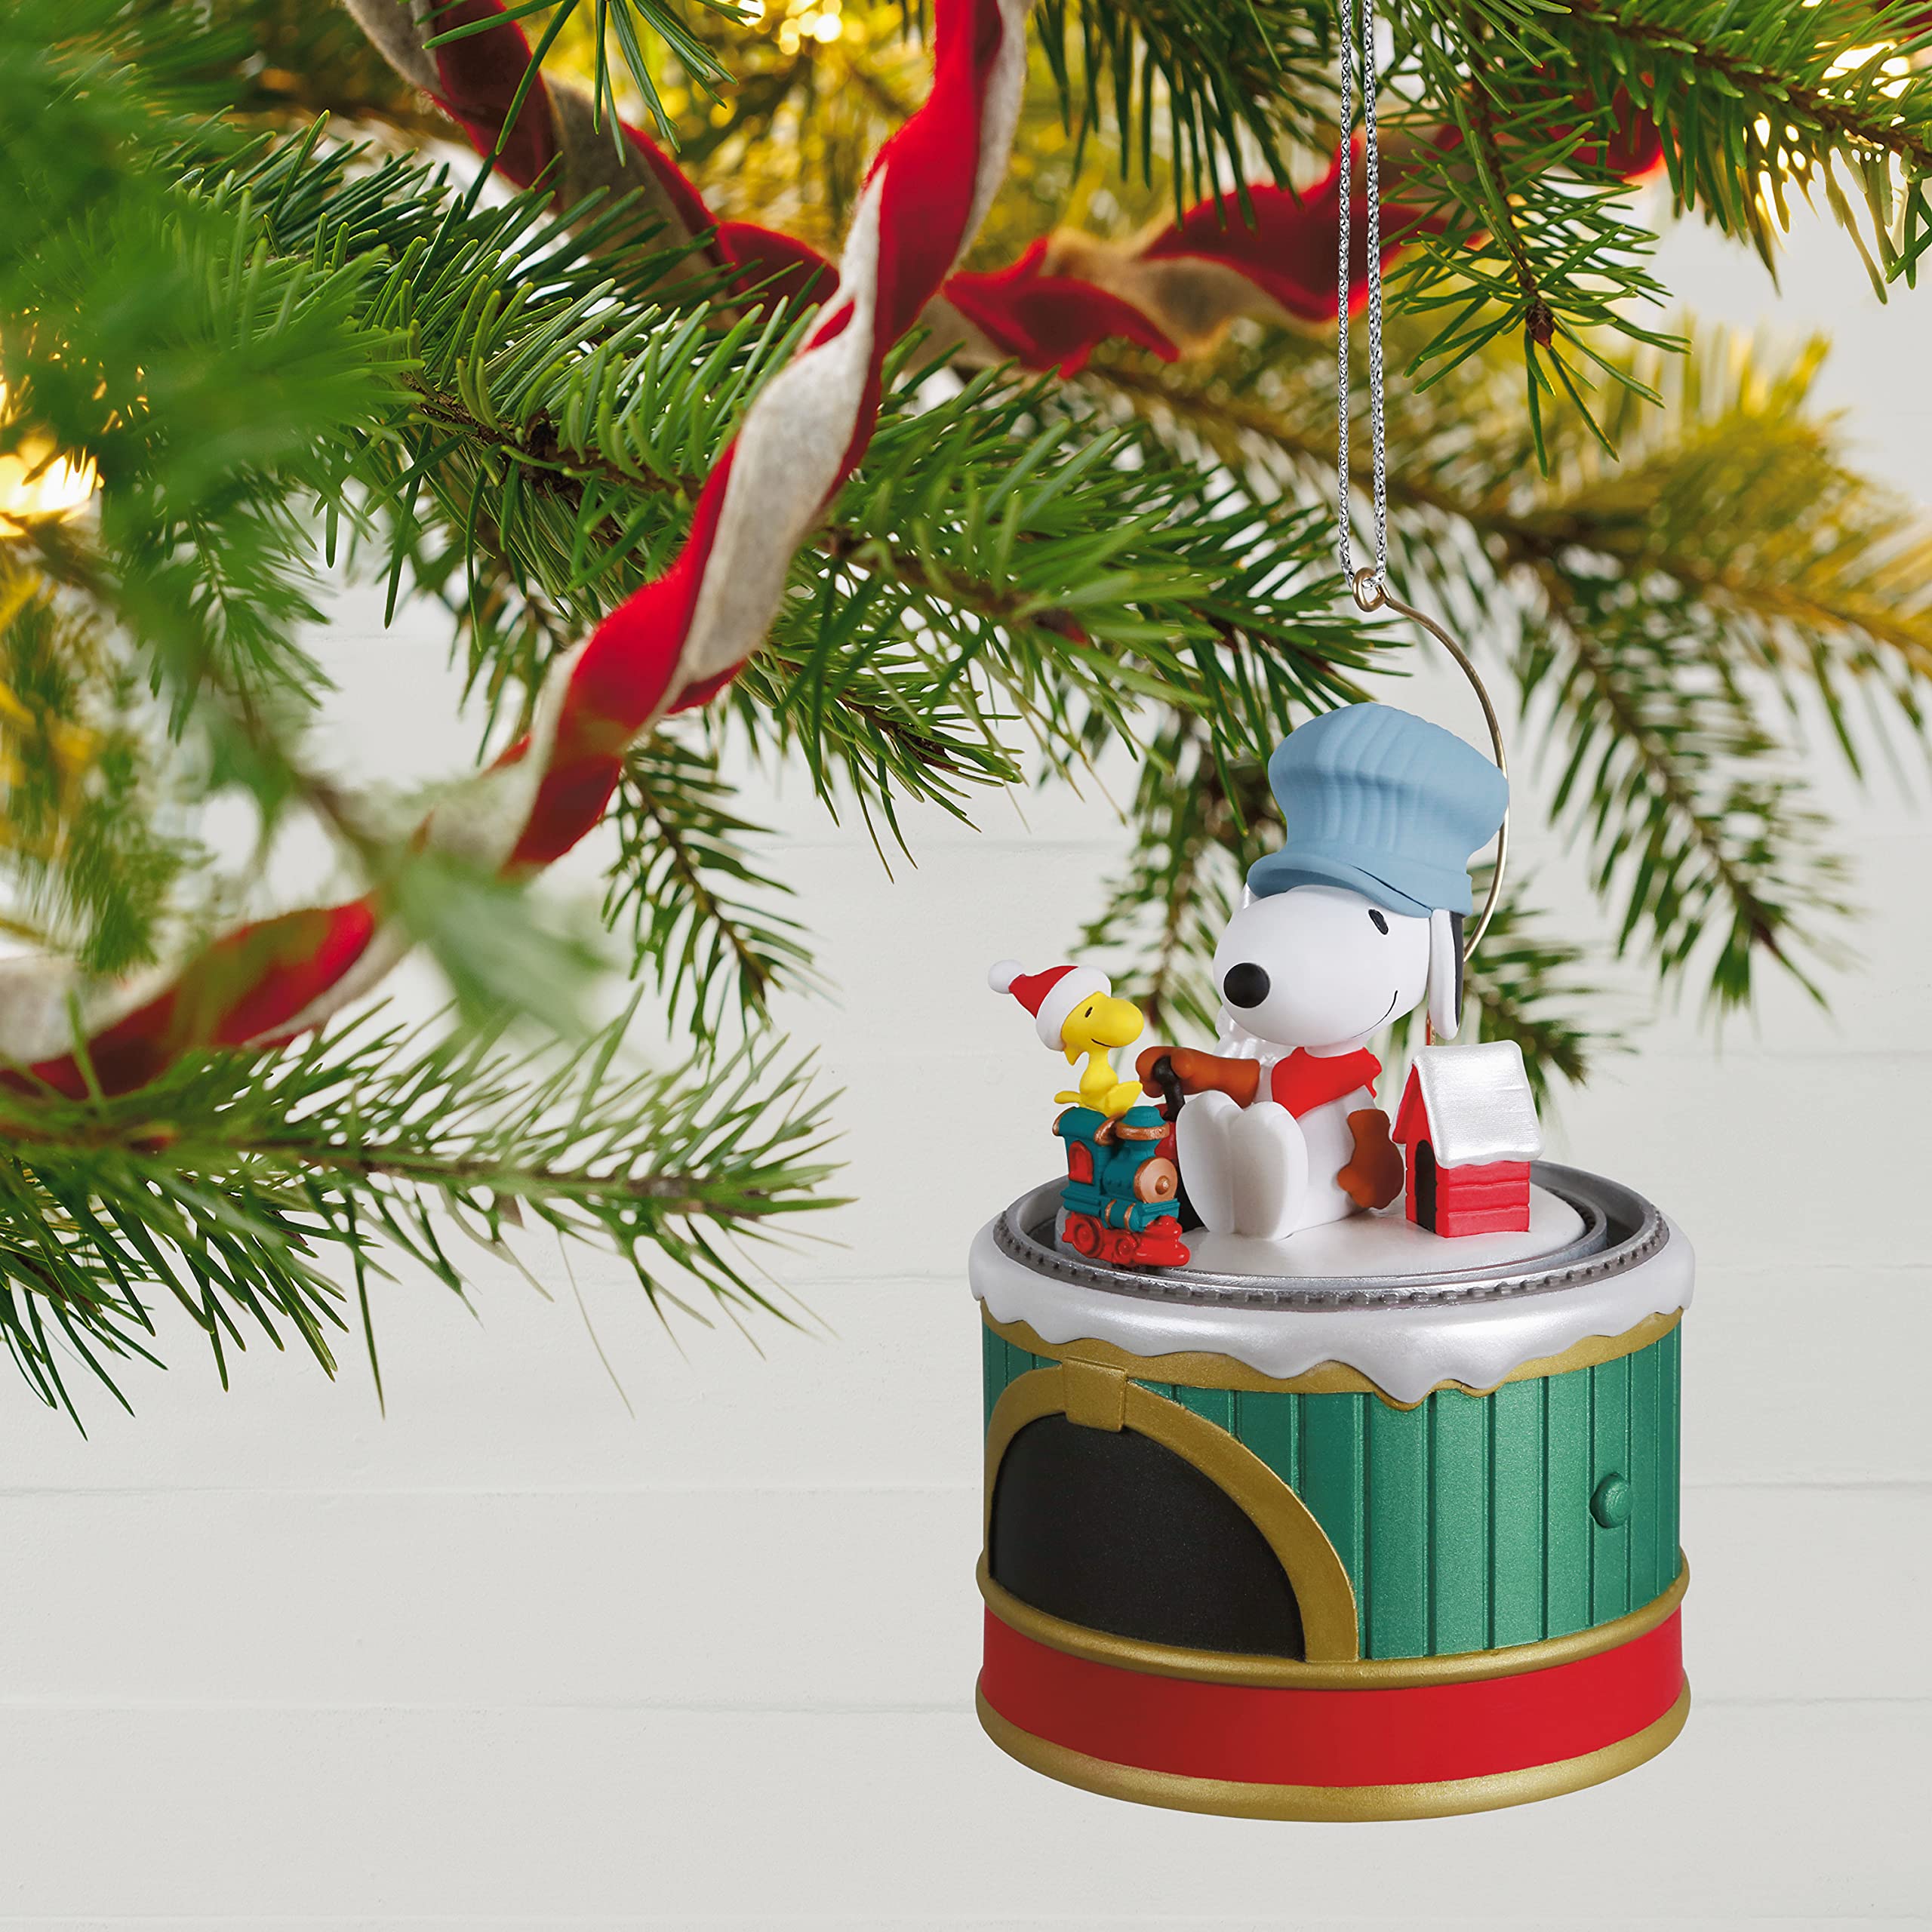 Hallmark Keepsake Christmas Ornament 2021, The Peanuts Gang Snoopy's Toy Train, Sound and Motion